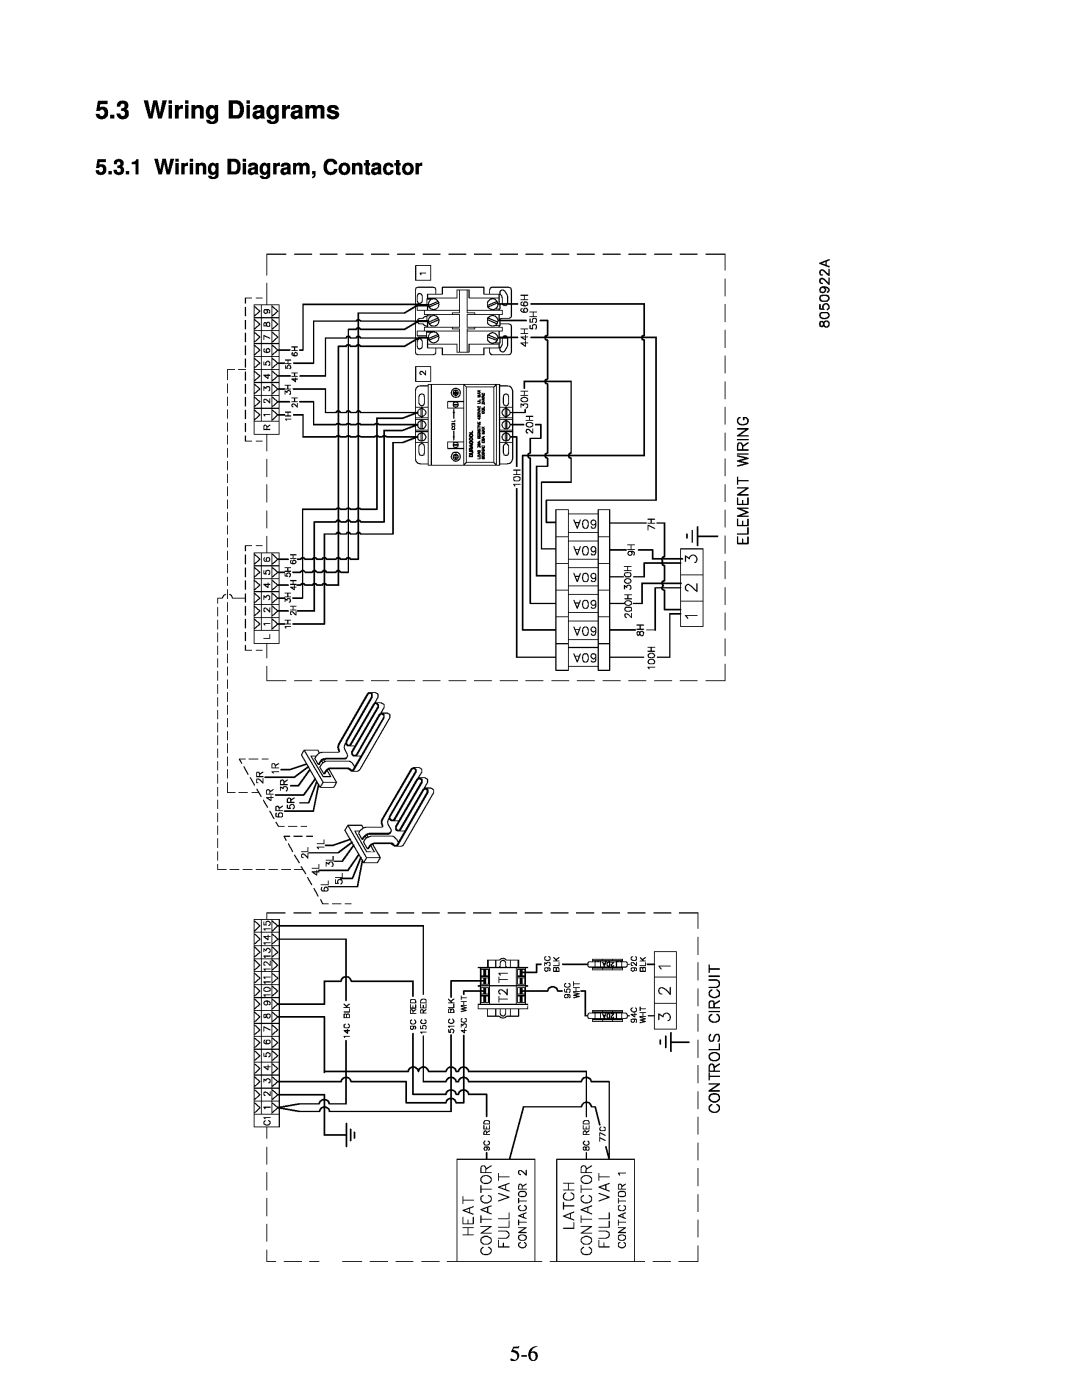 Frymaster H20.5 SERIES manual Wiring Diagrams, Wiring Diagram, Contactor 